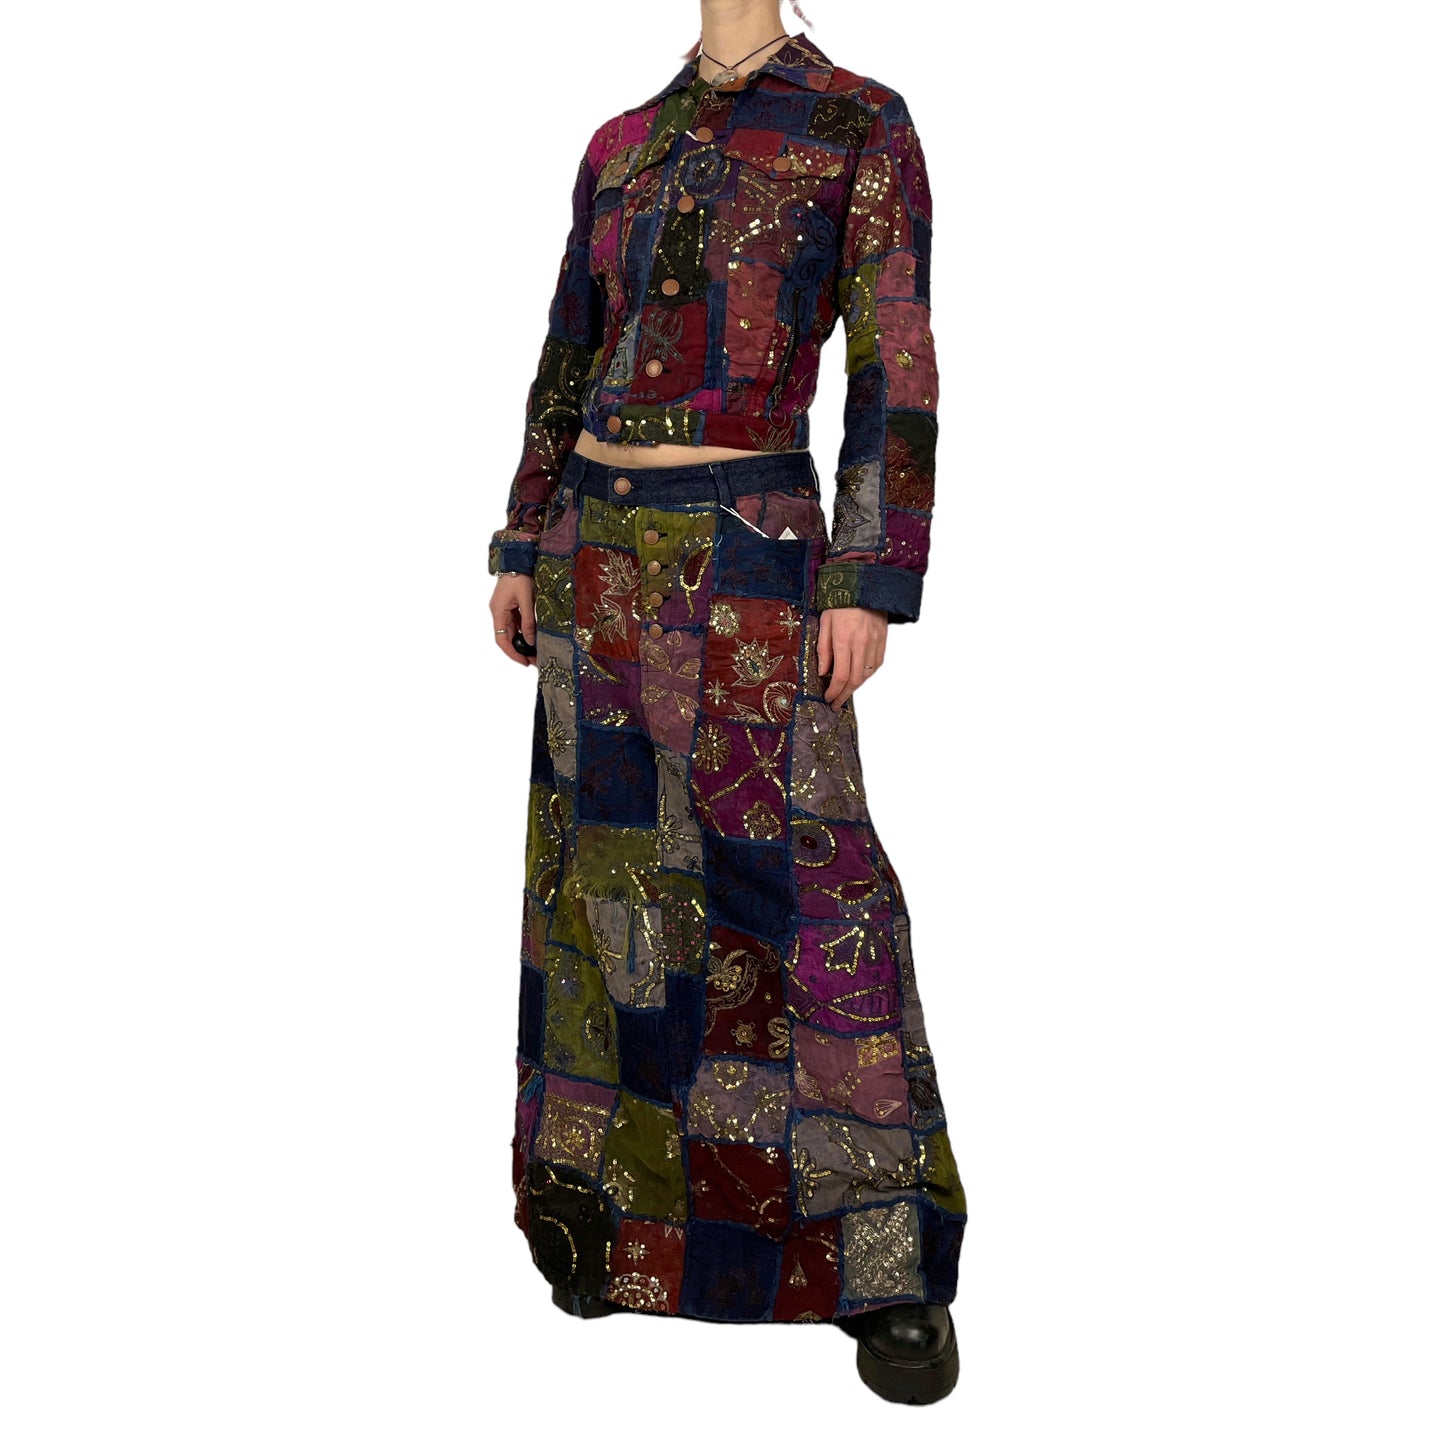 S/S 1999 Jean Paul Gaultier patchwork skirt